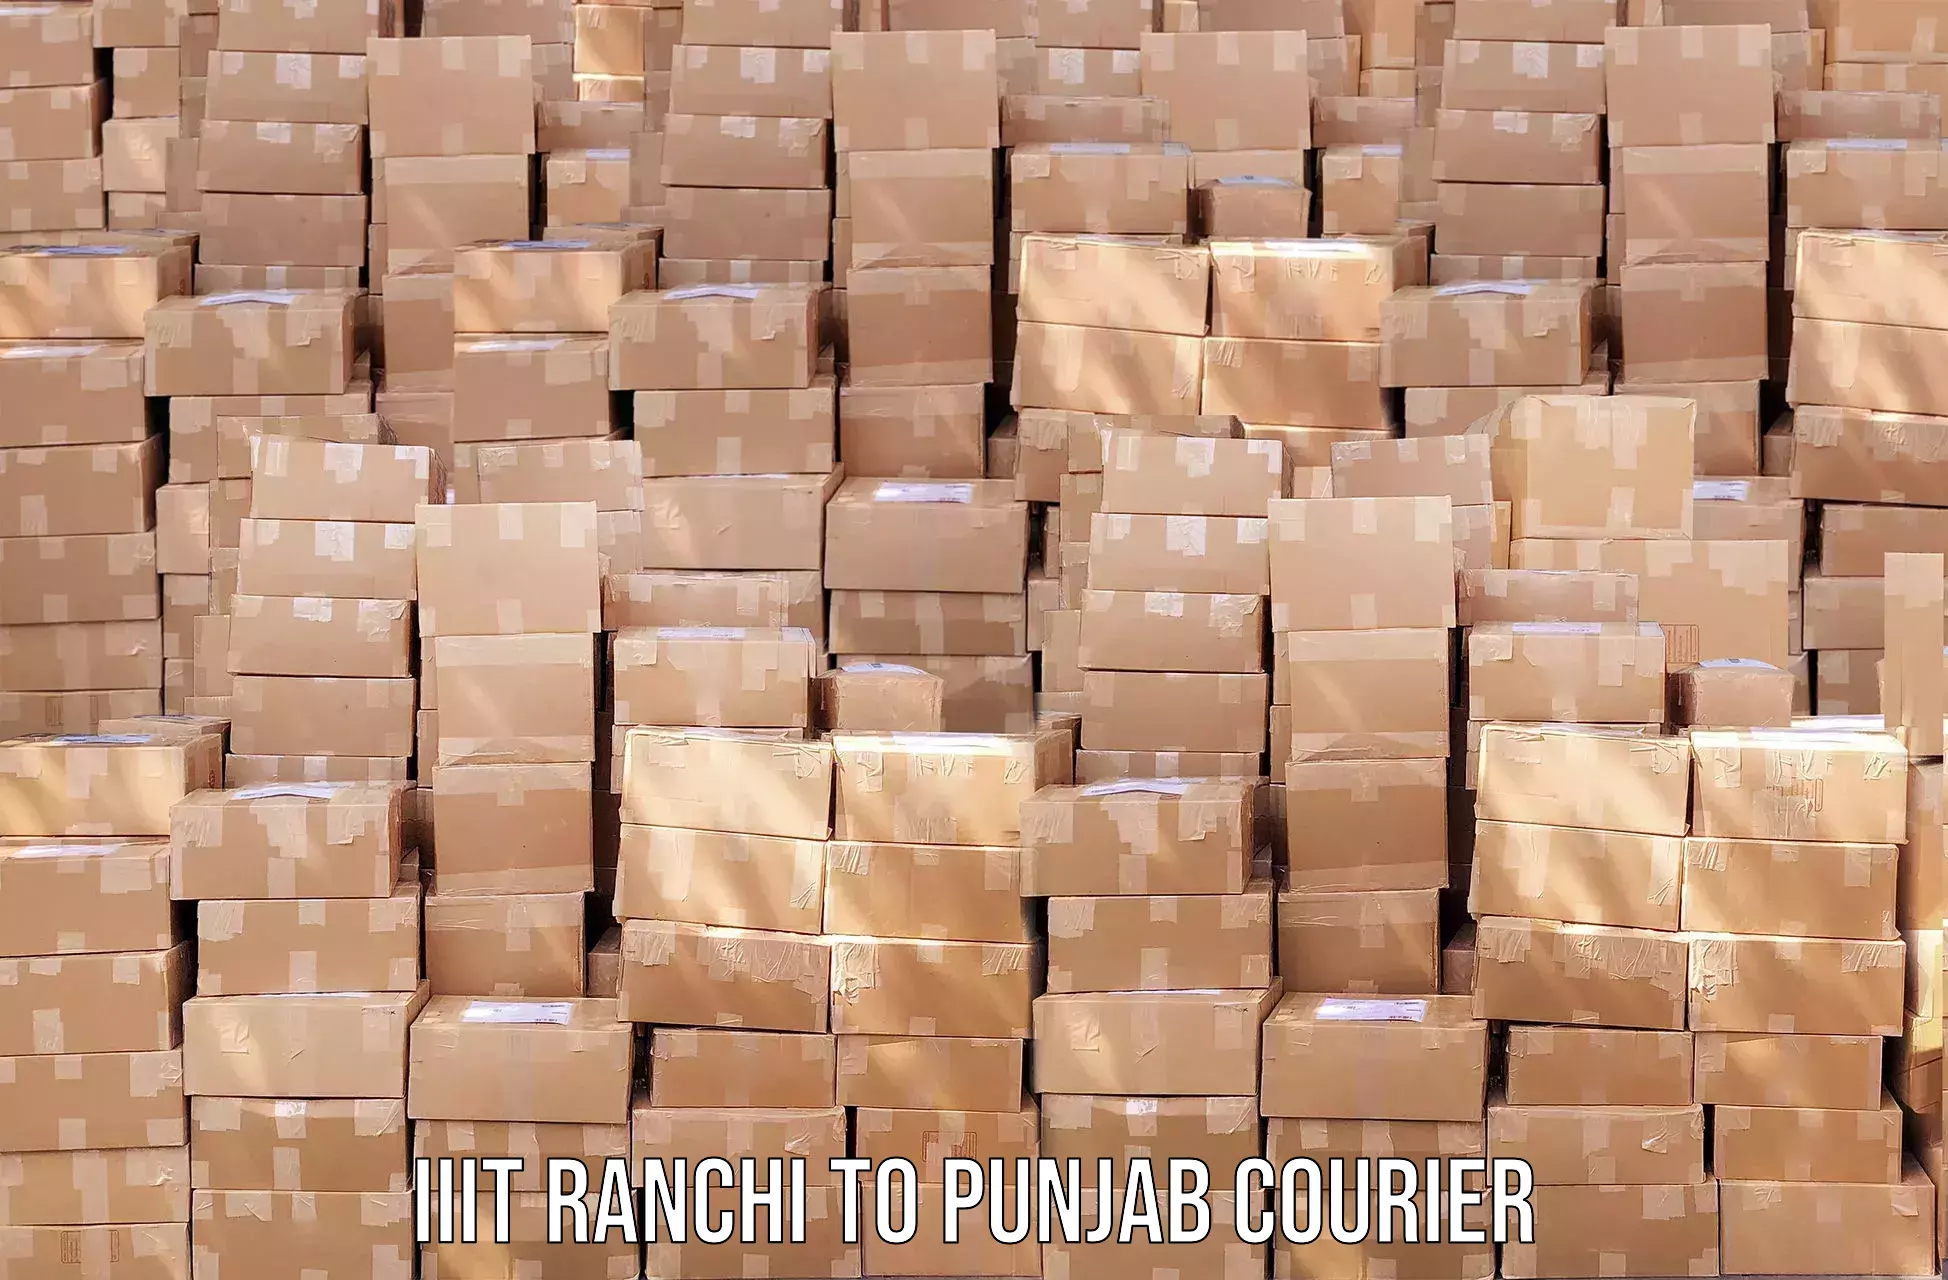 Courier service comparison IIIT Ranchi to Dinanagar